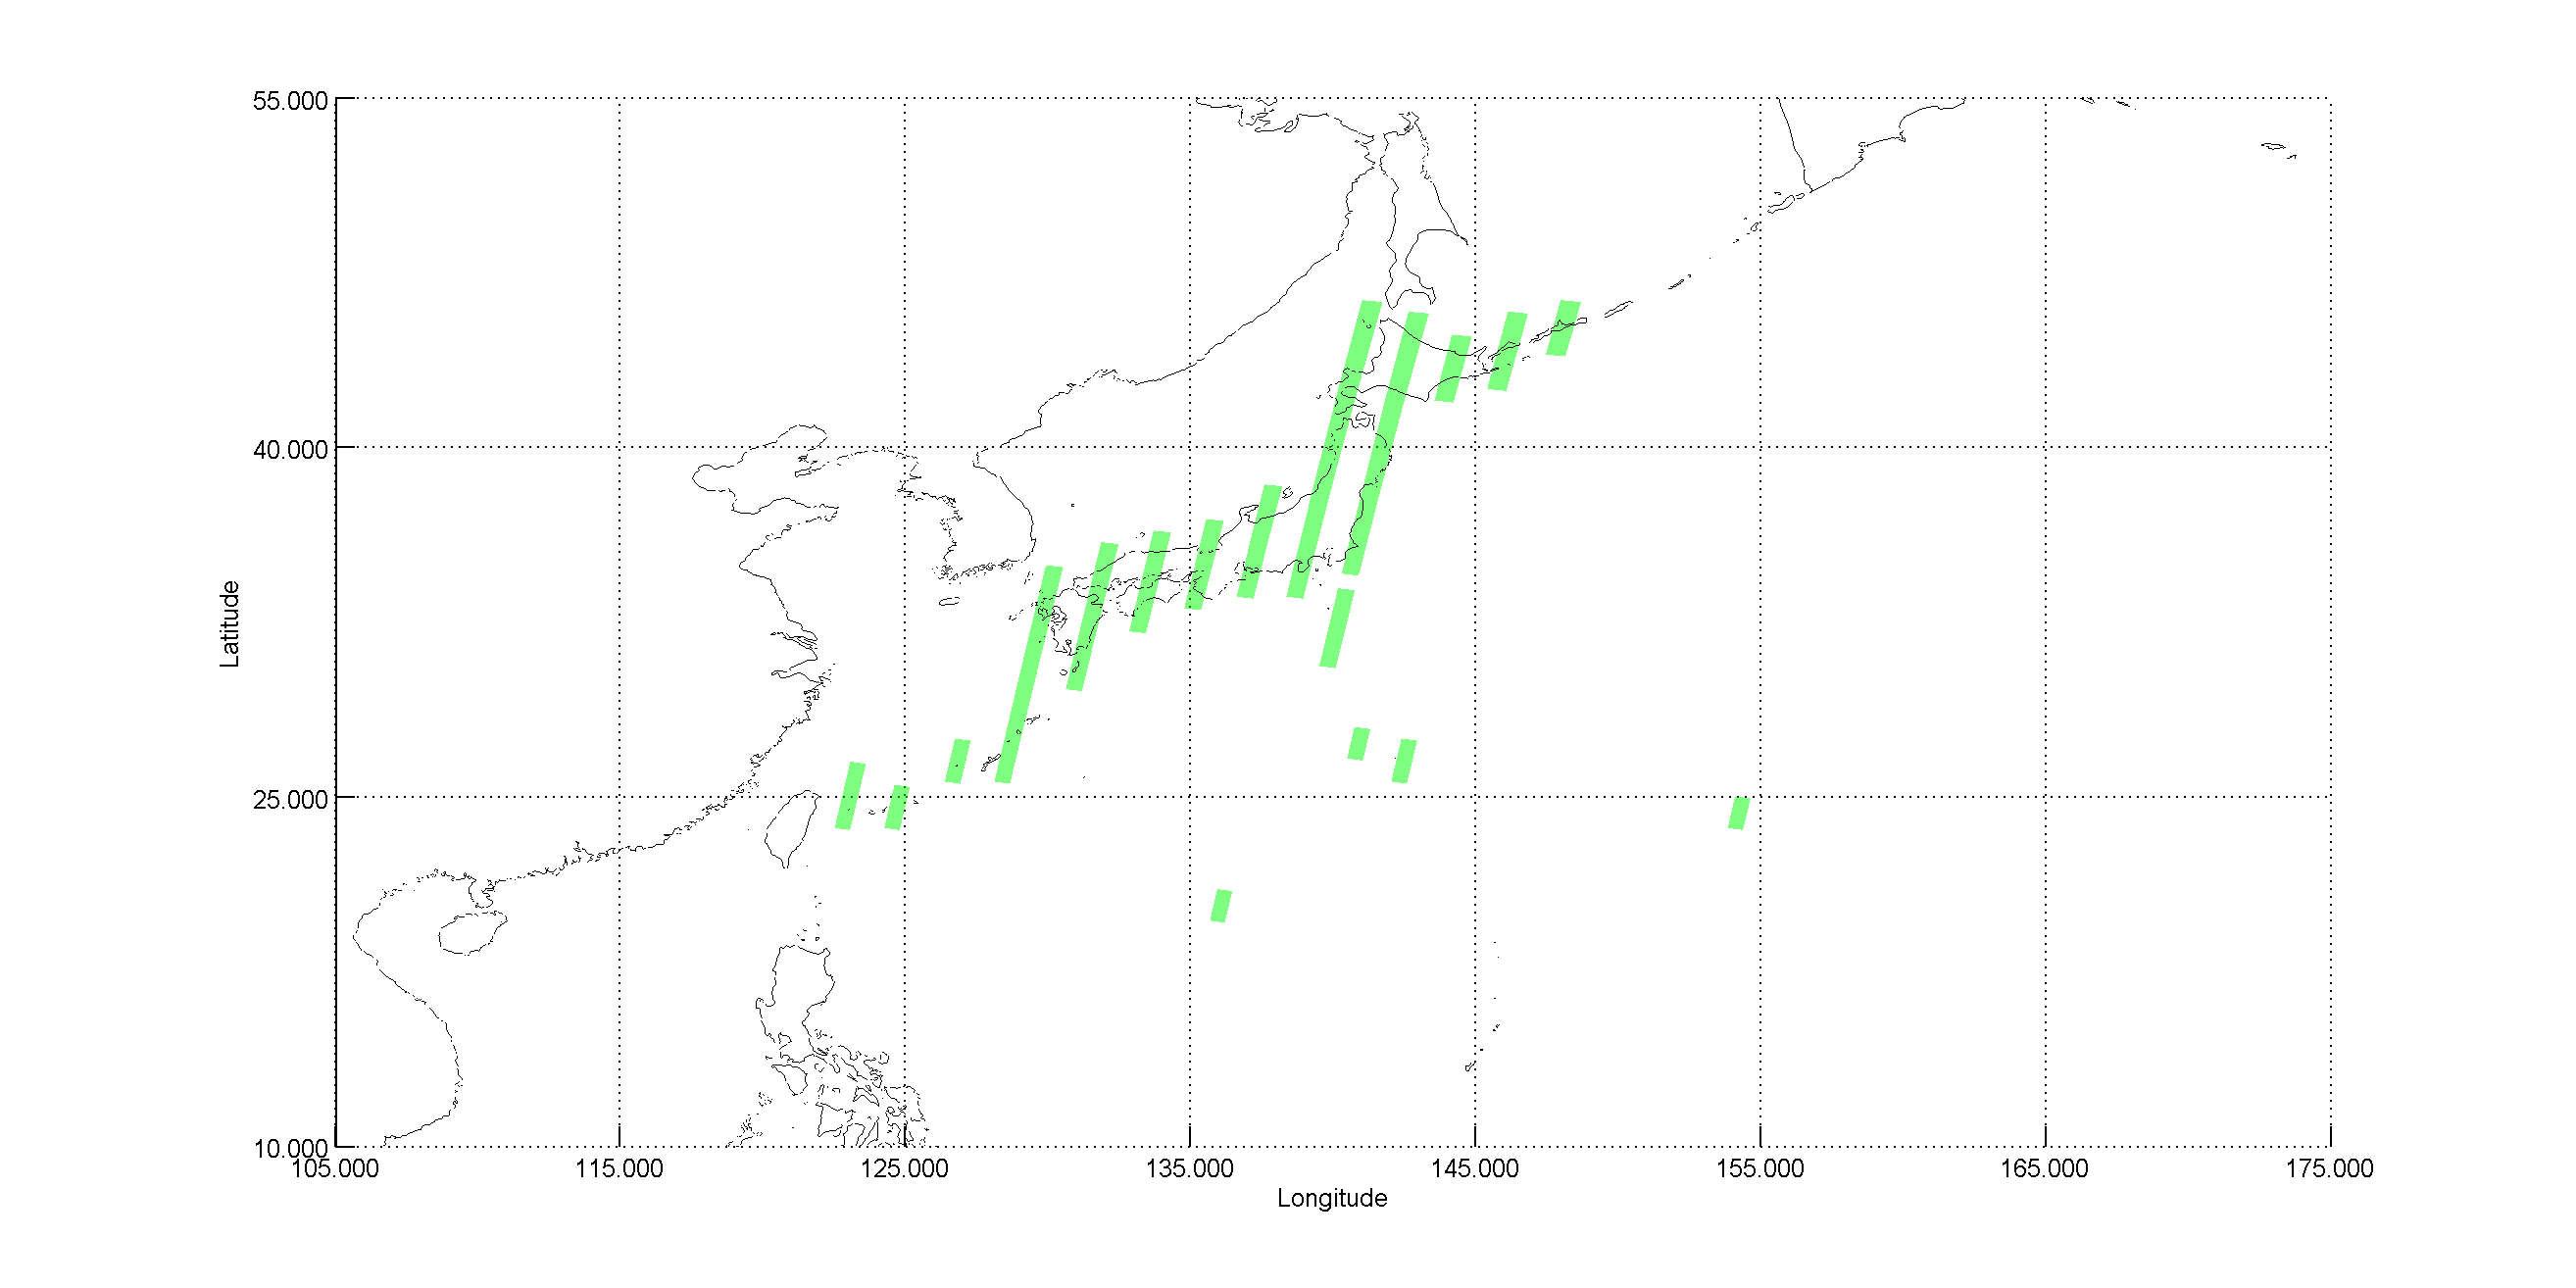 CYCLE_156 - Japan Descending passes